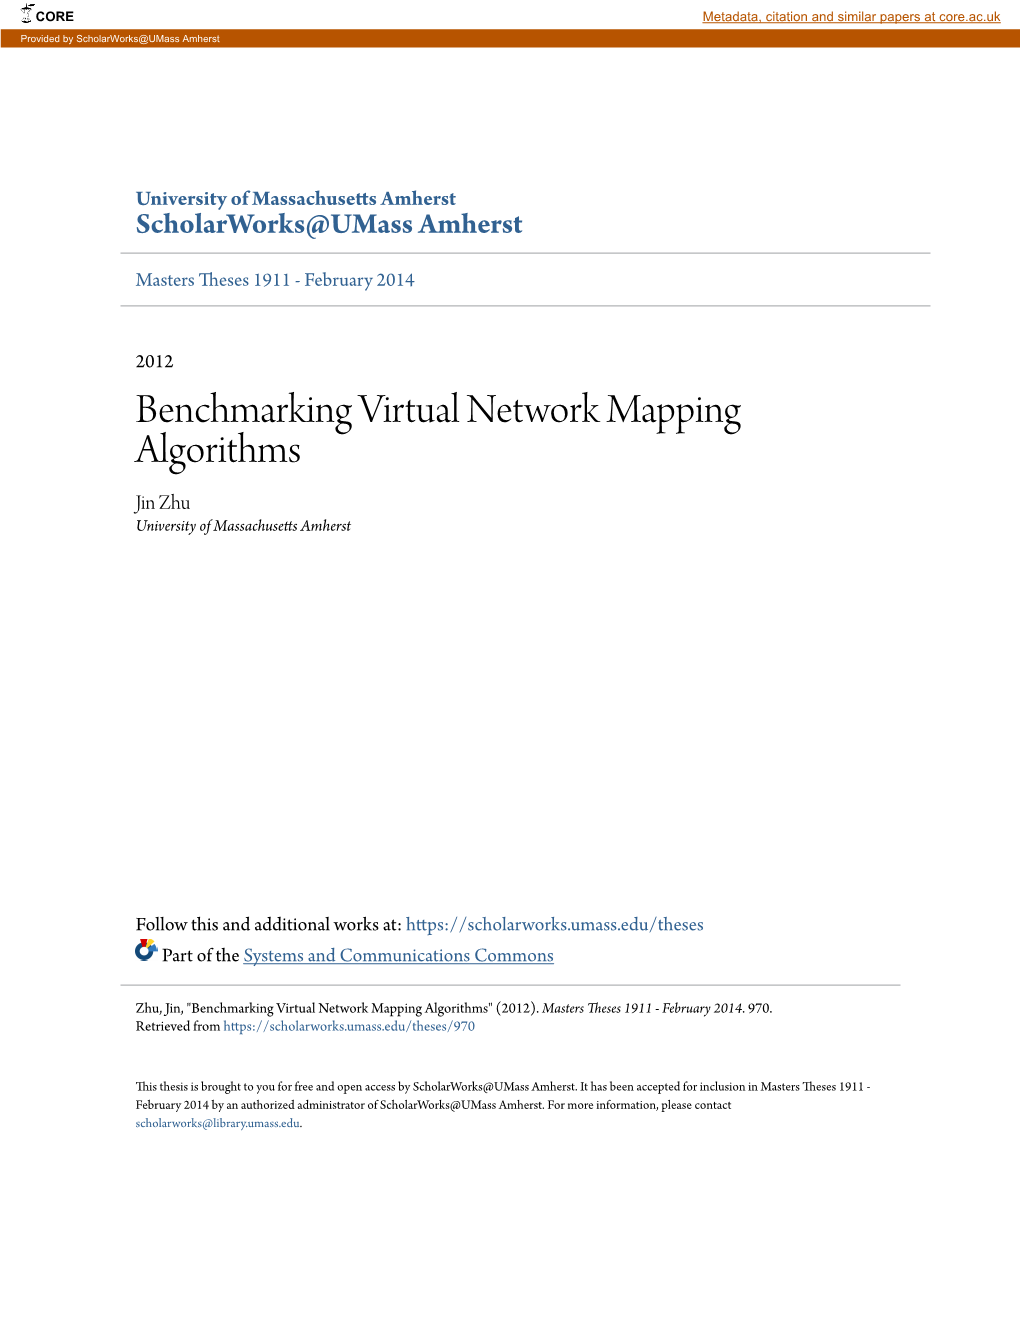 Benchmarking Virtual Network Mapping Algorithms Jin Zhu University of Massachusetts Amherst